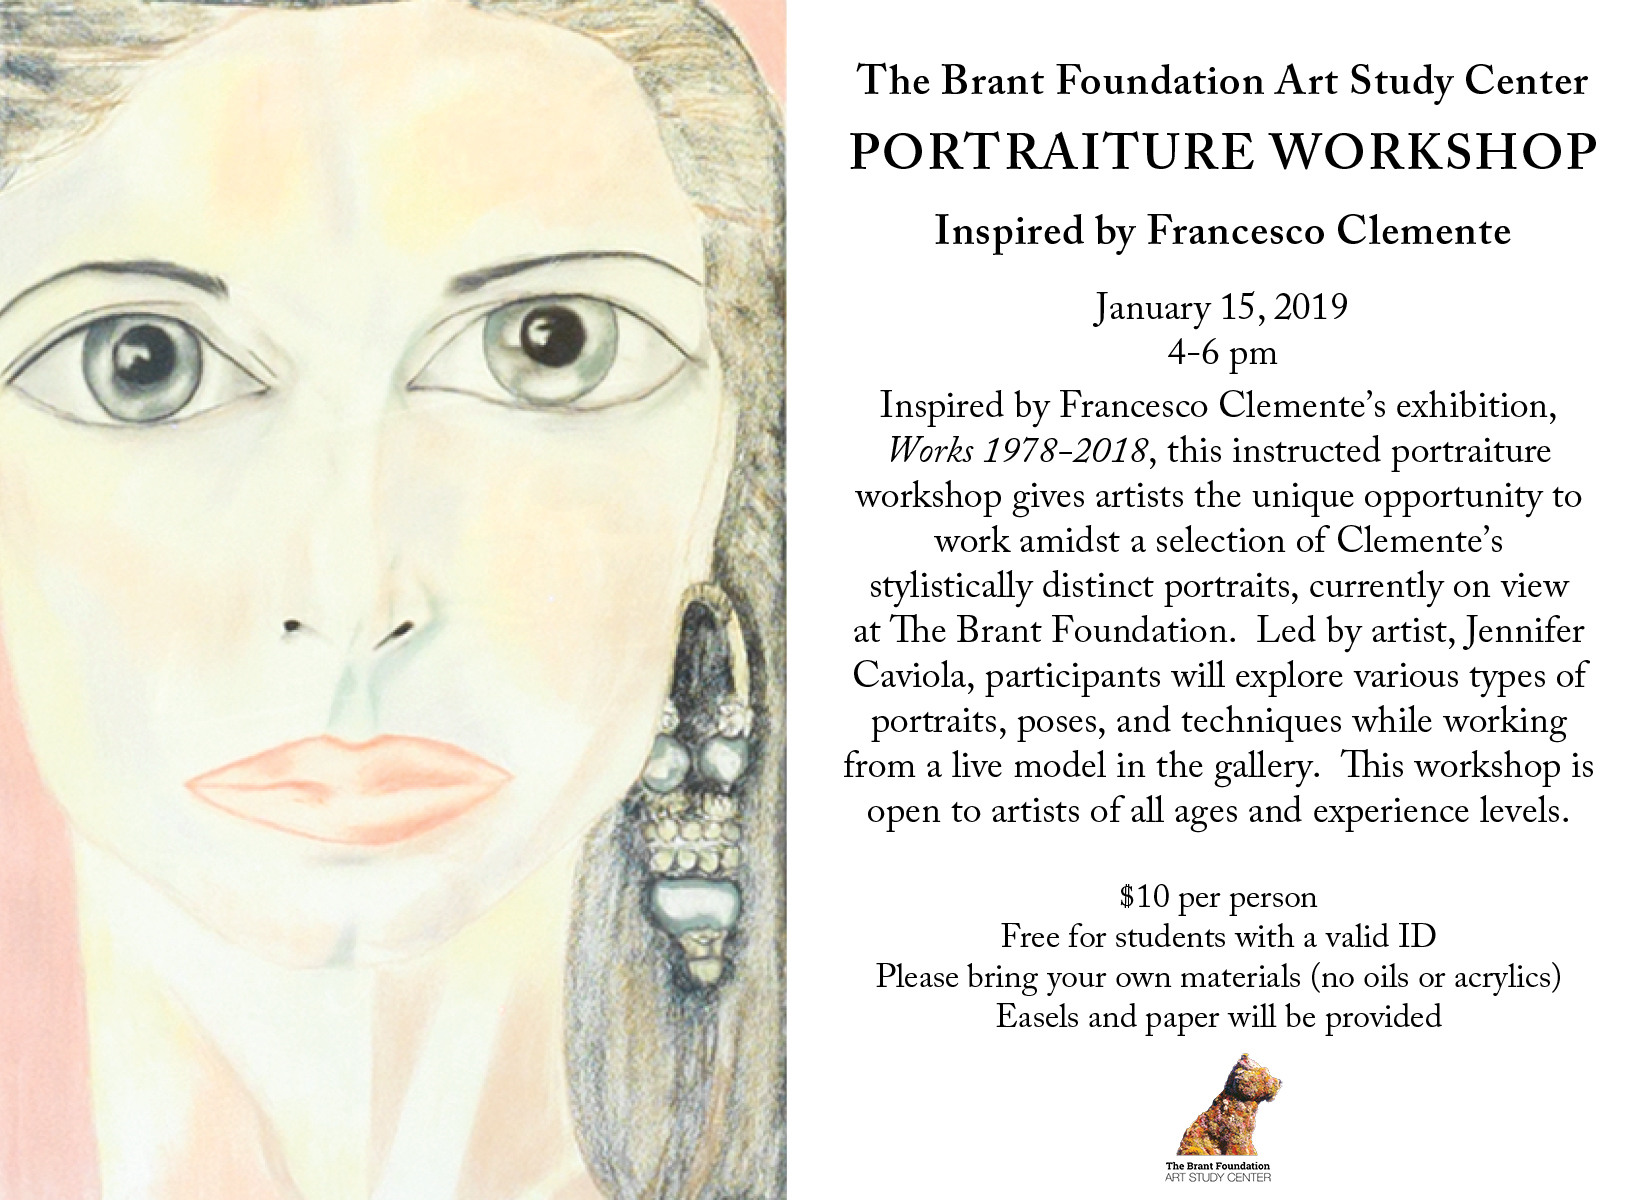 Portraiture Workshop Inspired by Francesco Clemente